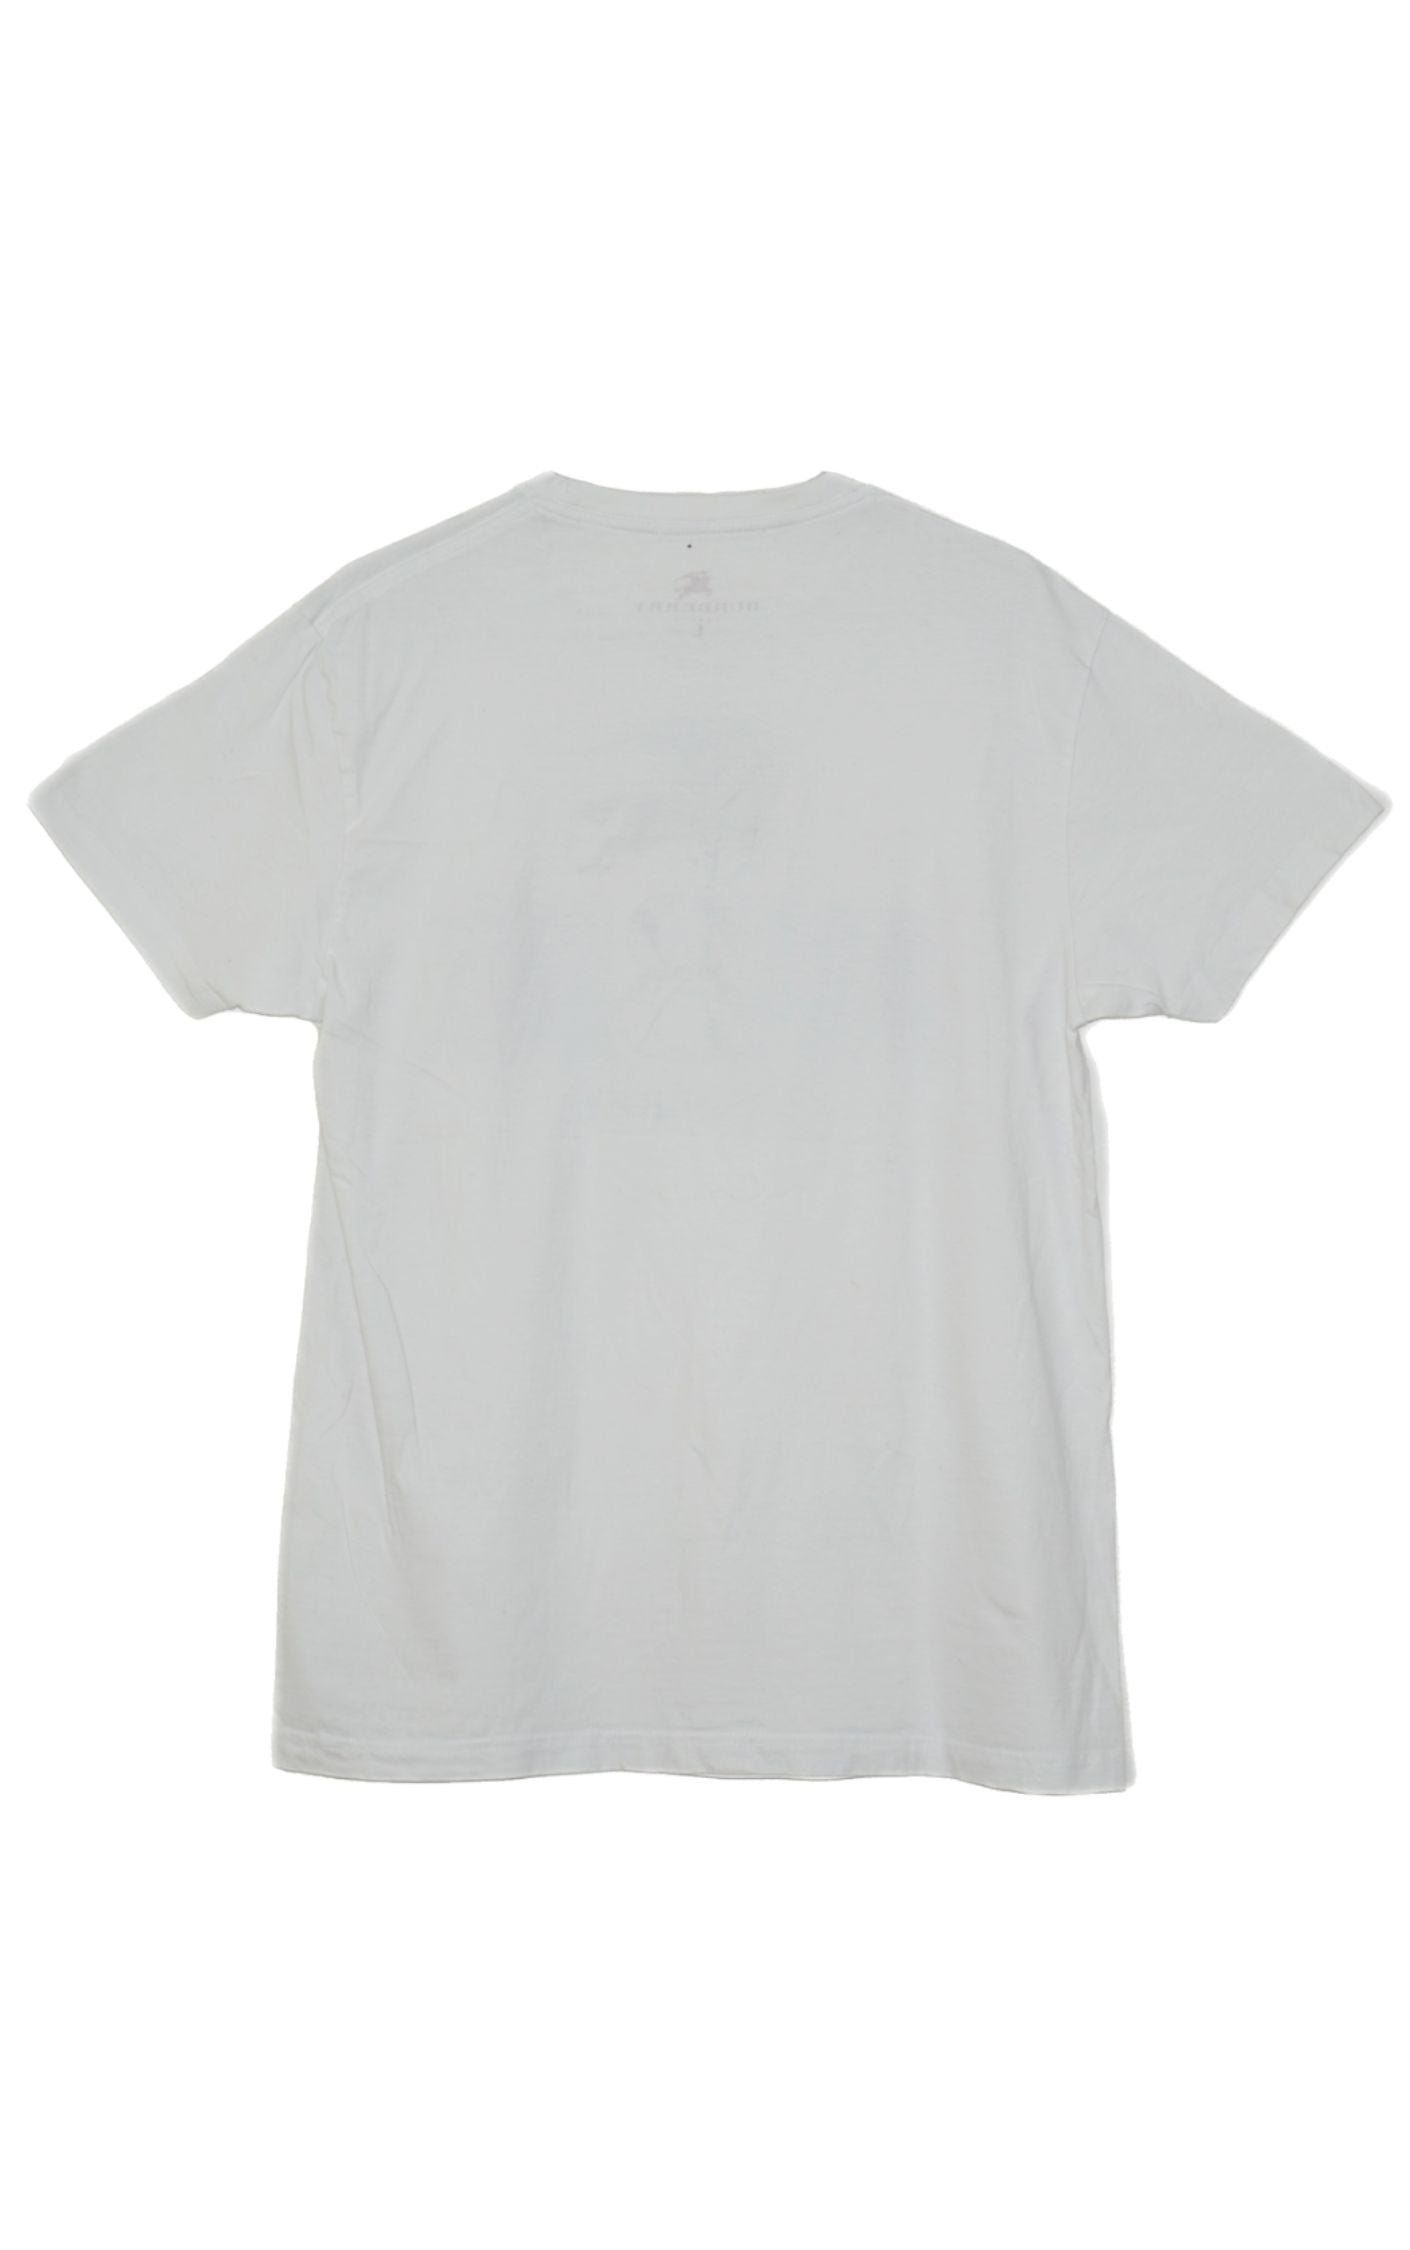 BURBERRY Prorsum Knight Logo T-Shirt resellum